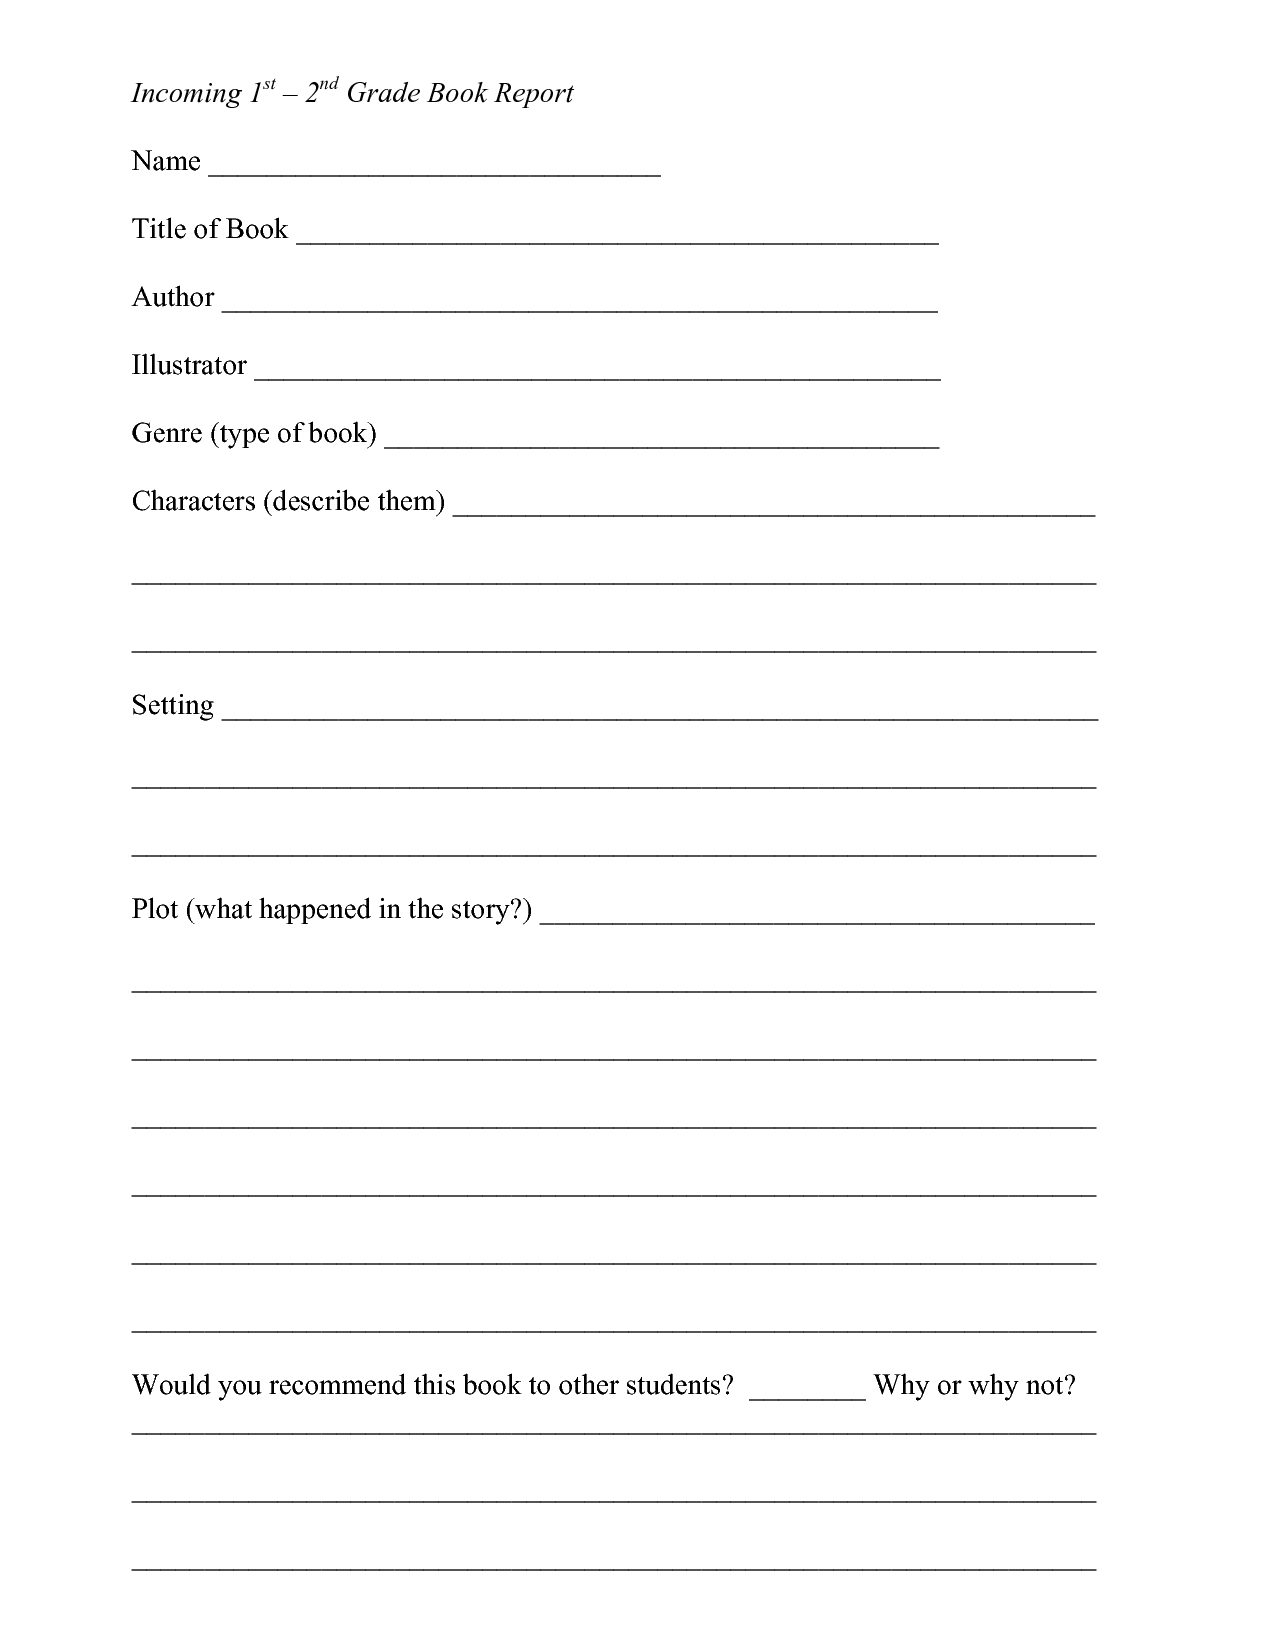 Book Report Template 2Nd Grade Free – Book Report Form Intended For 2Nd Grade Book Report Template